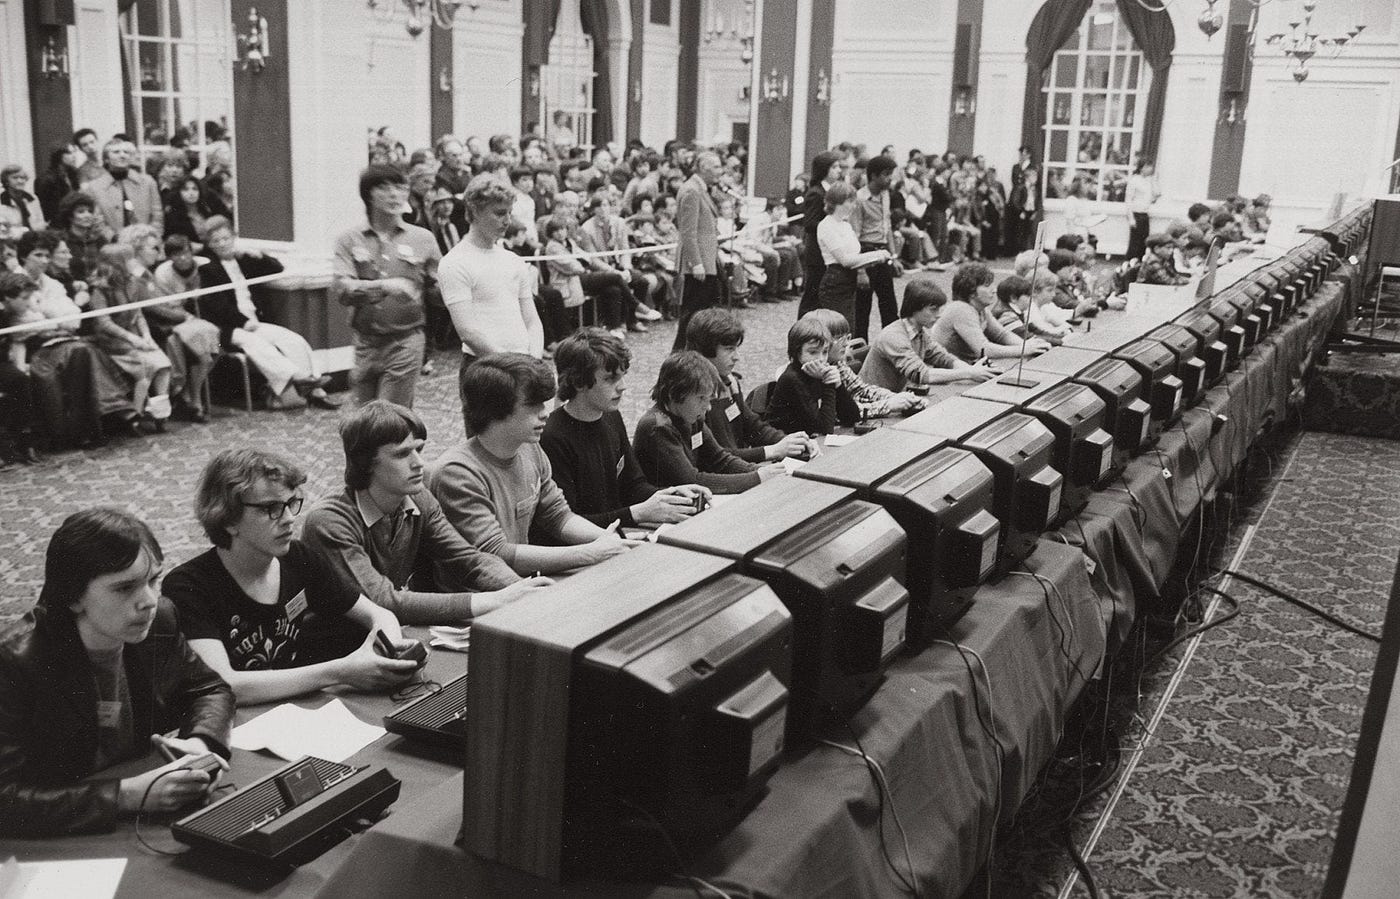 10 Ways Atari Shaped The Gaming World We Know Today